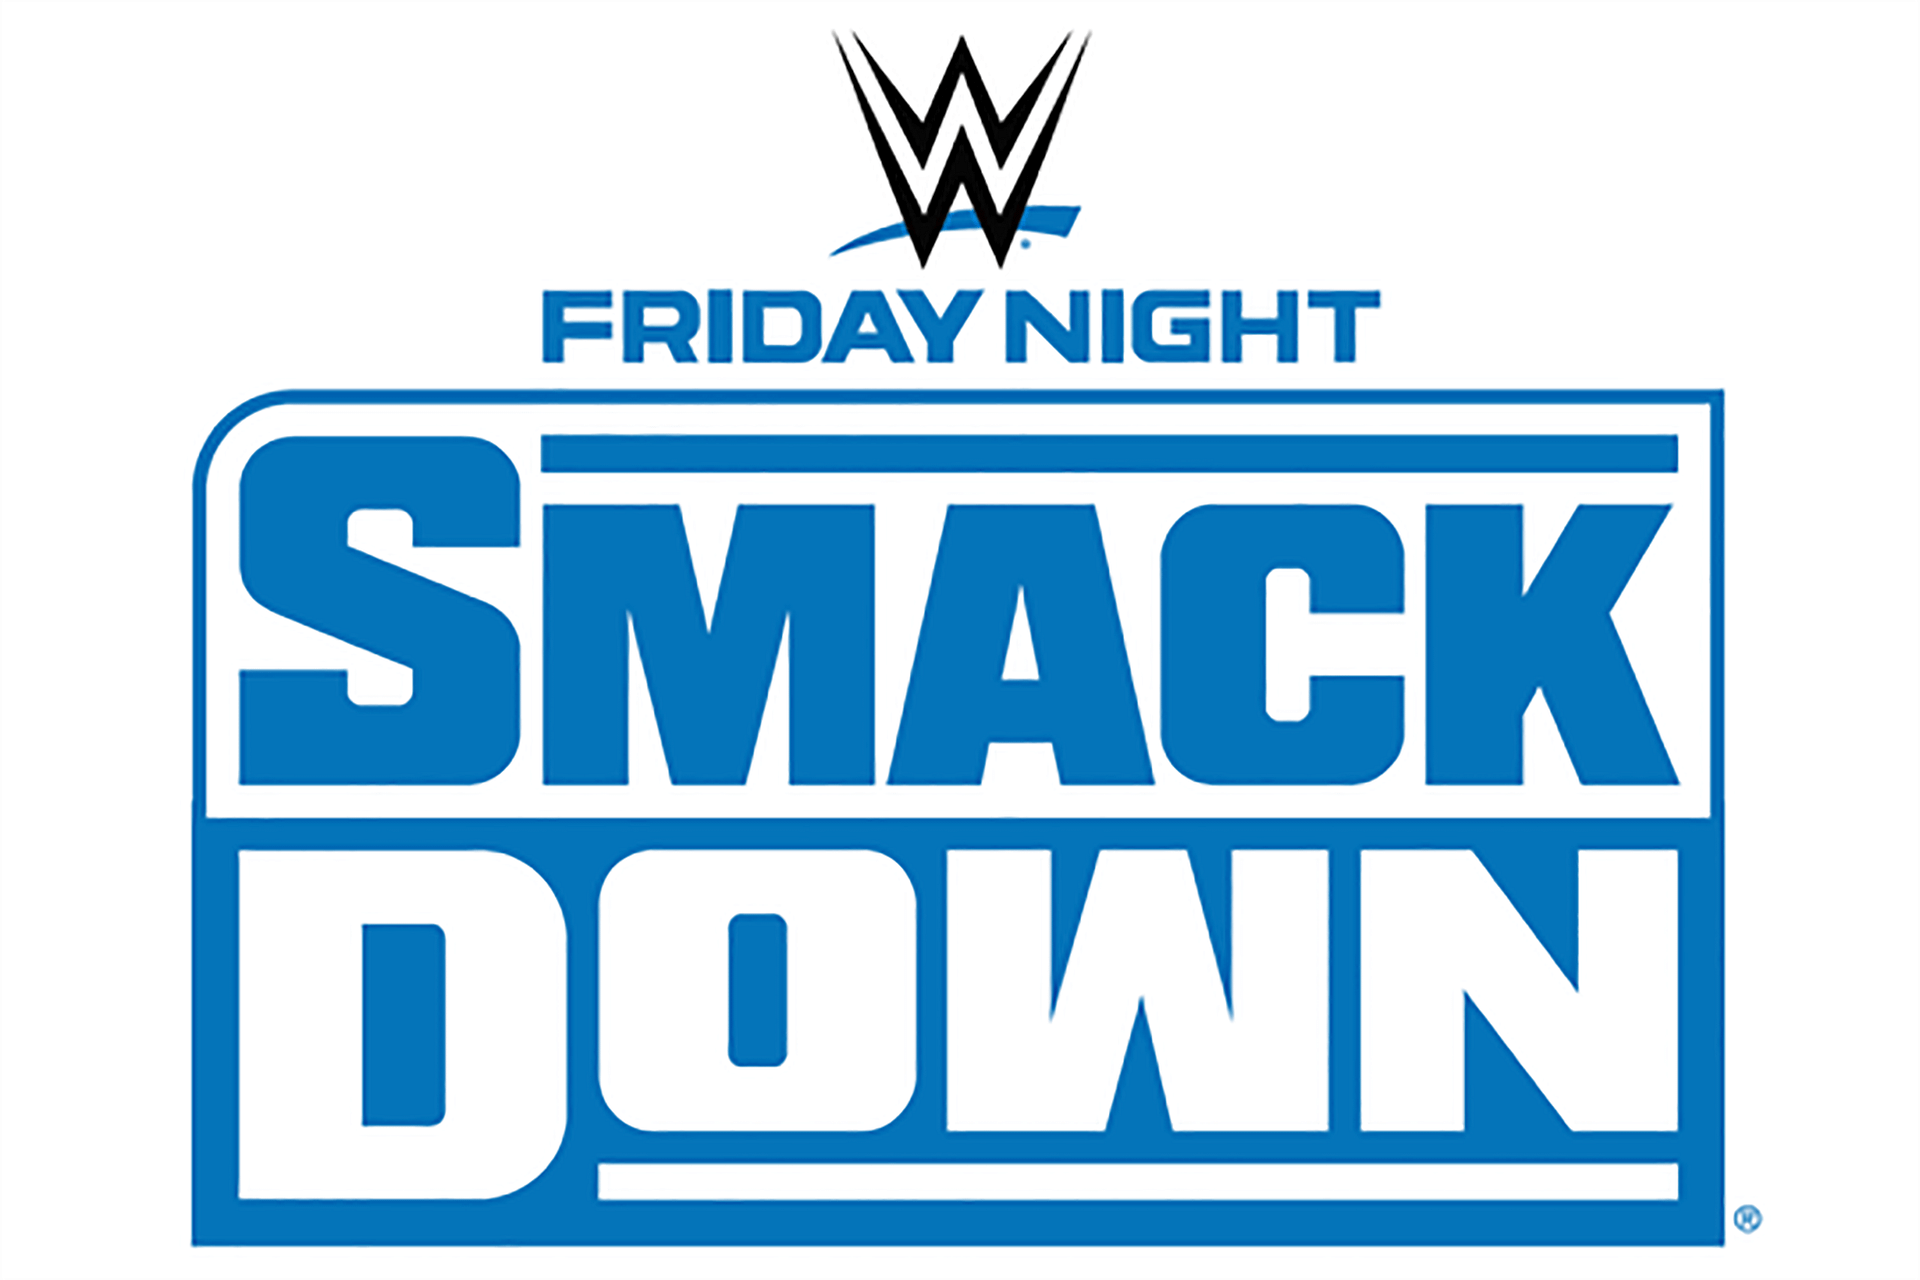 WWE SMACKDOWN. Рестлер WWE SMACKDOWN. SMACKDOWN logo. WWE Friday Night SMACKDOWN logo.